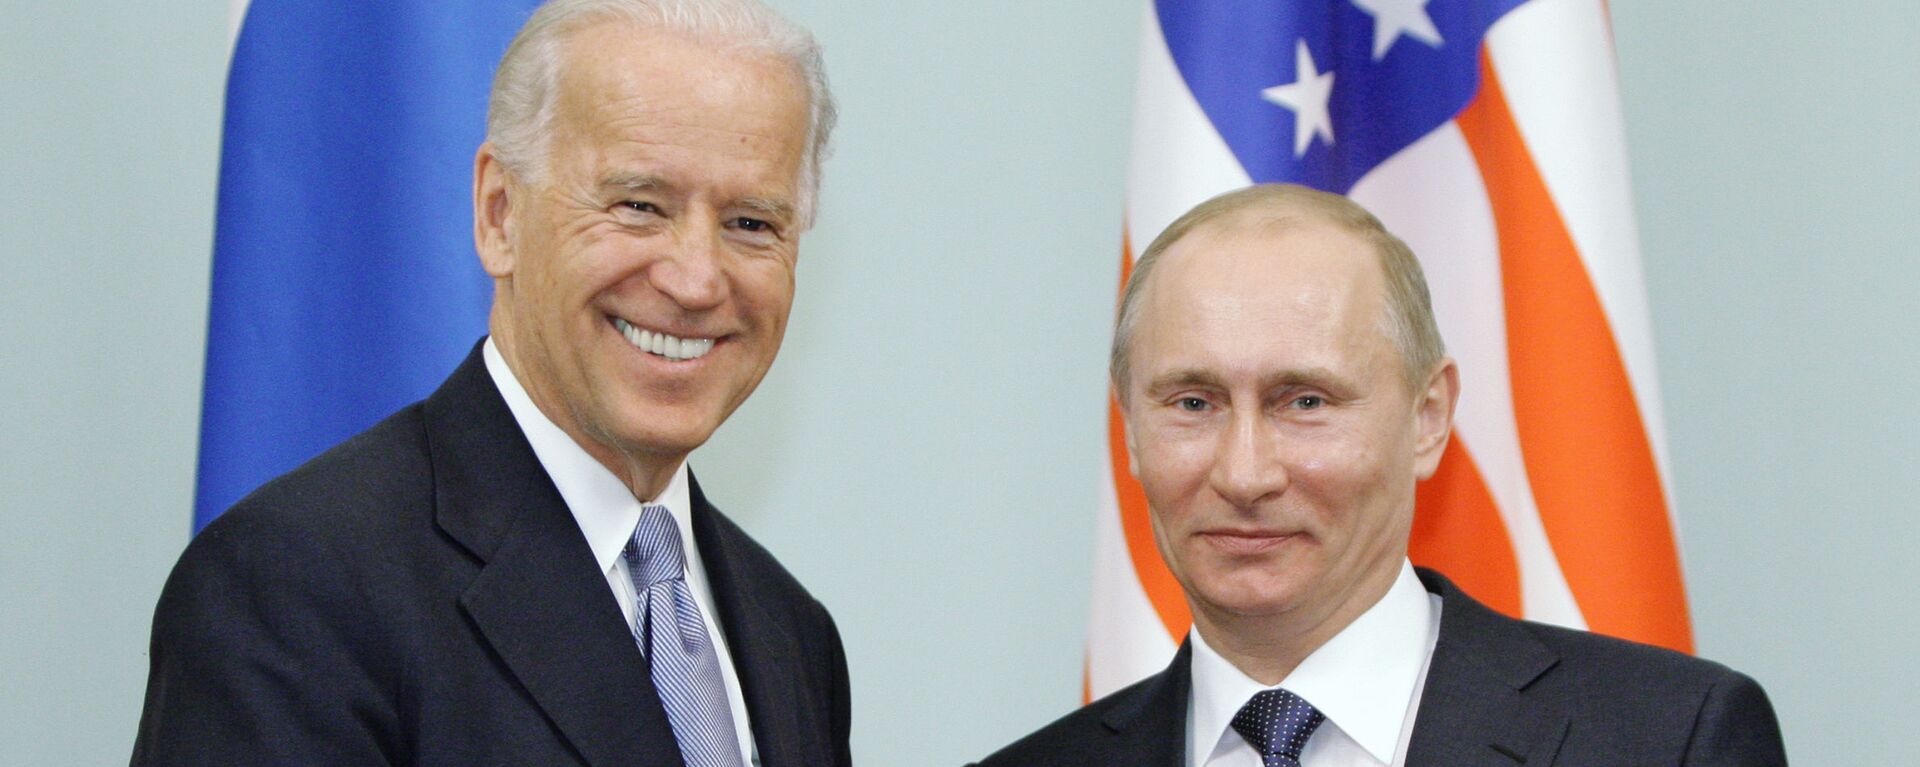 Joe Biden y Vladímir Putin en Rusia (archivo, año 2011) - Sputnik Mundo, 1920, 29.04.2021